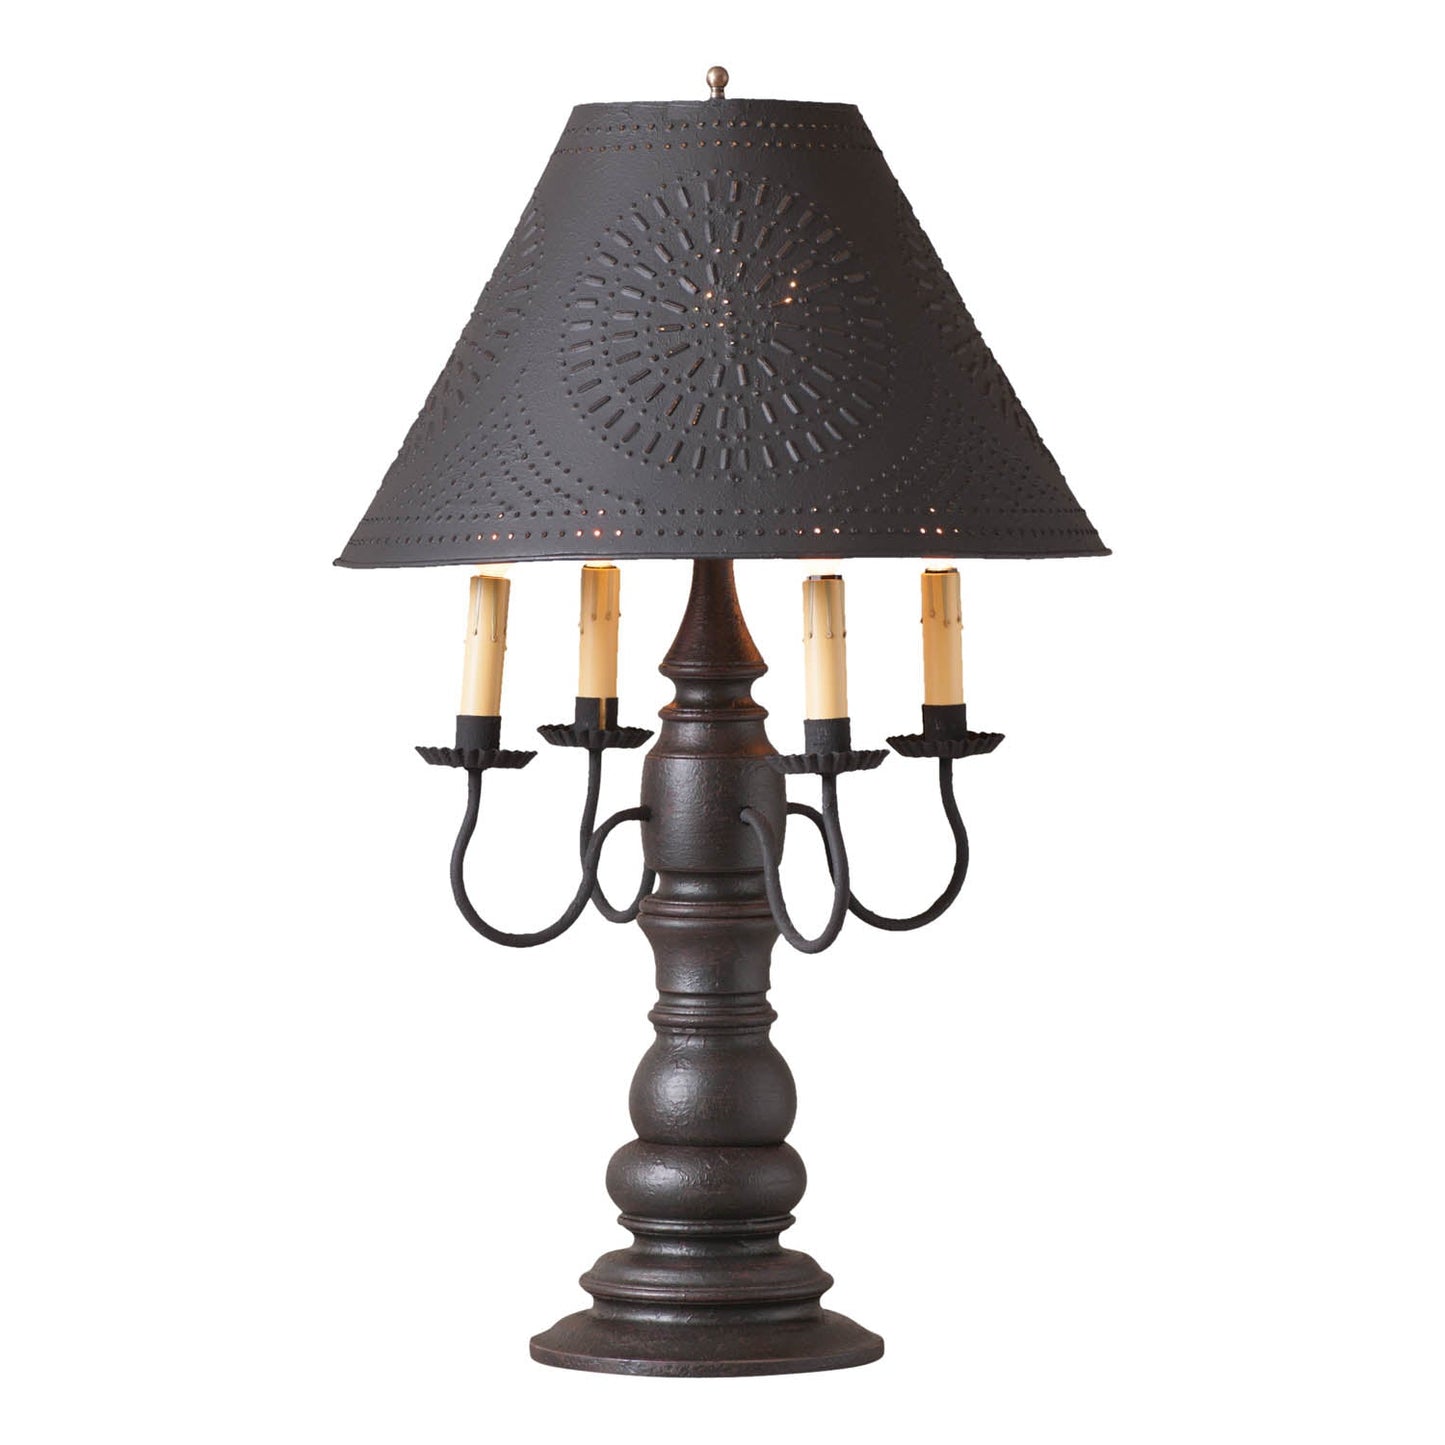 Bradford Lamp in Americana Black with Linen Fabric Shade